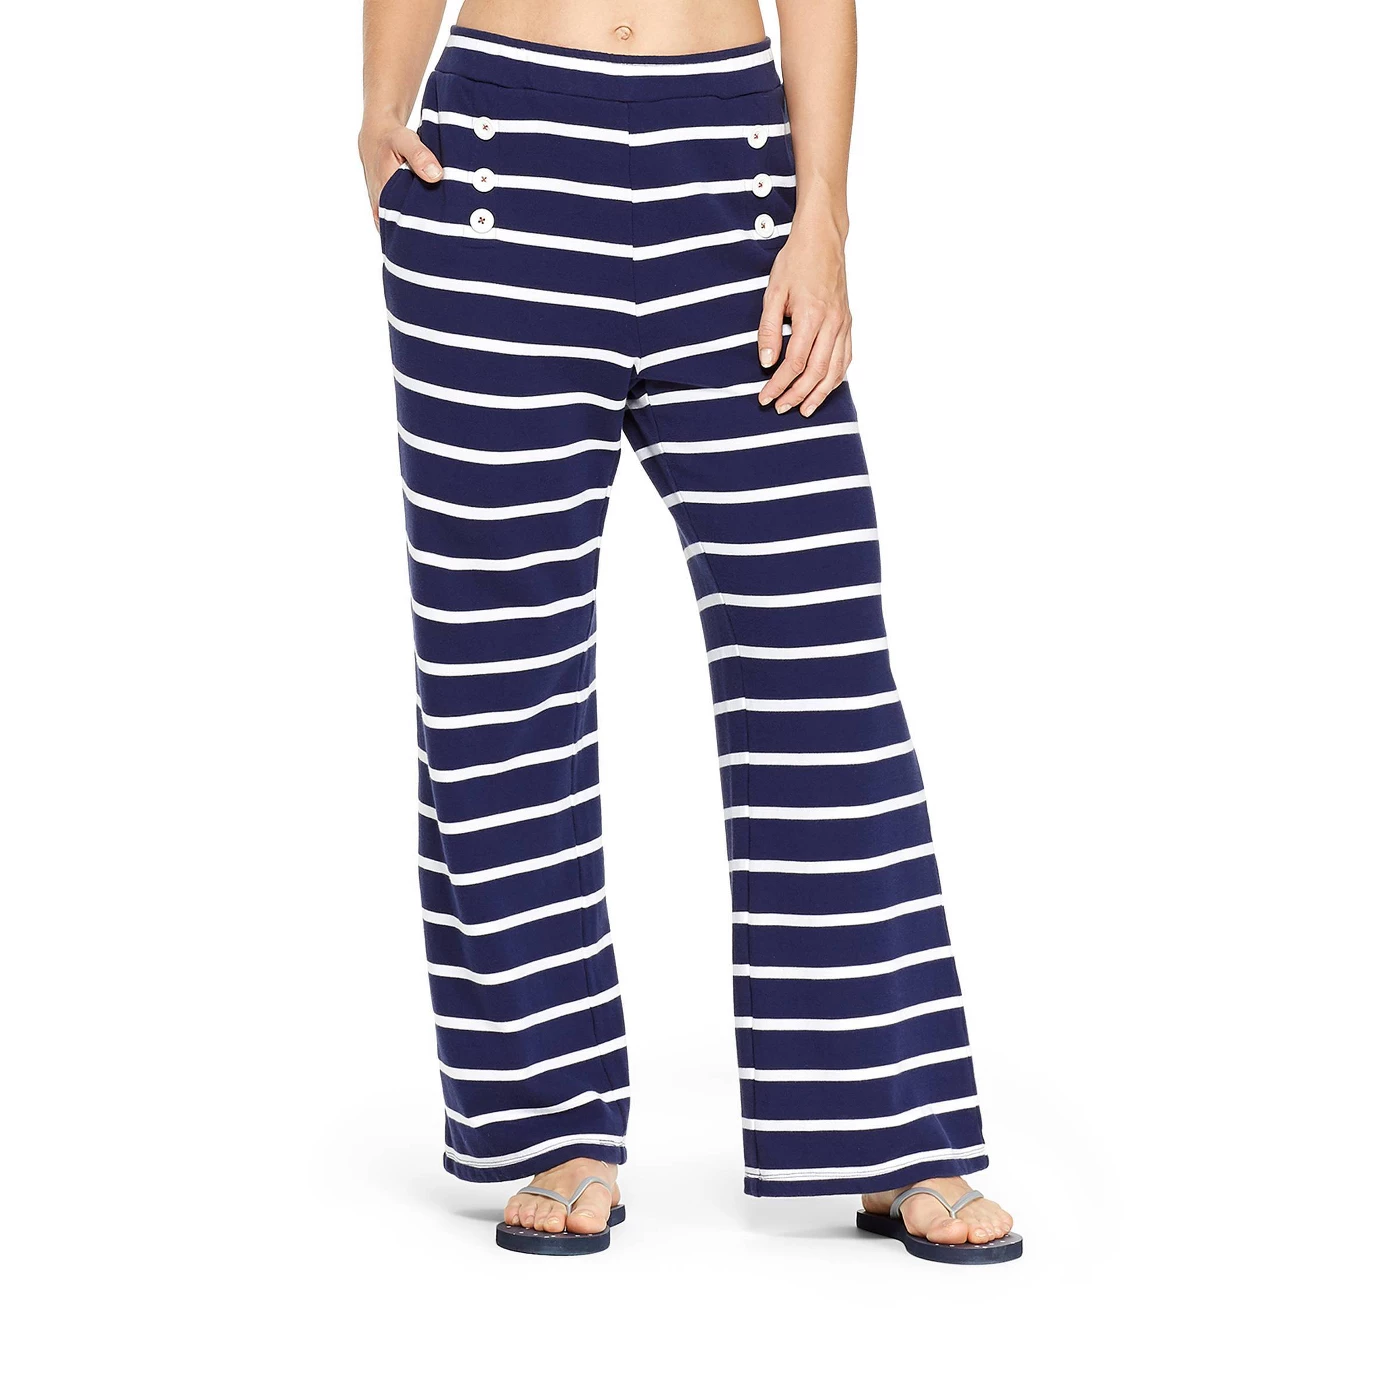 Women's Striped Pants - Navy/White - vineyard vinesÂ® for Target - image 1 of 5